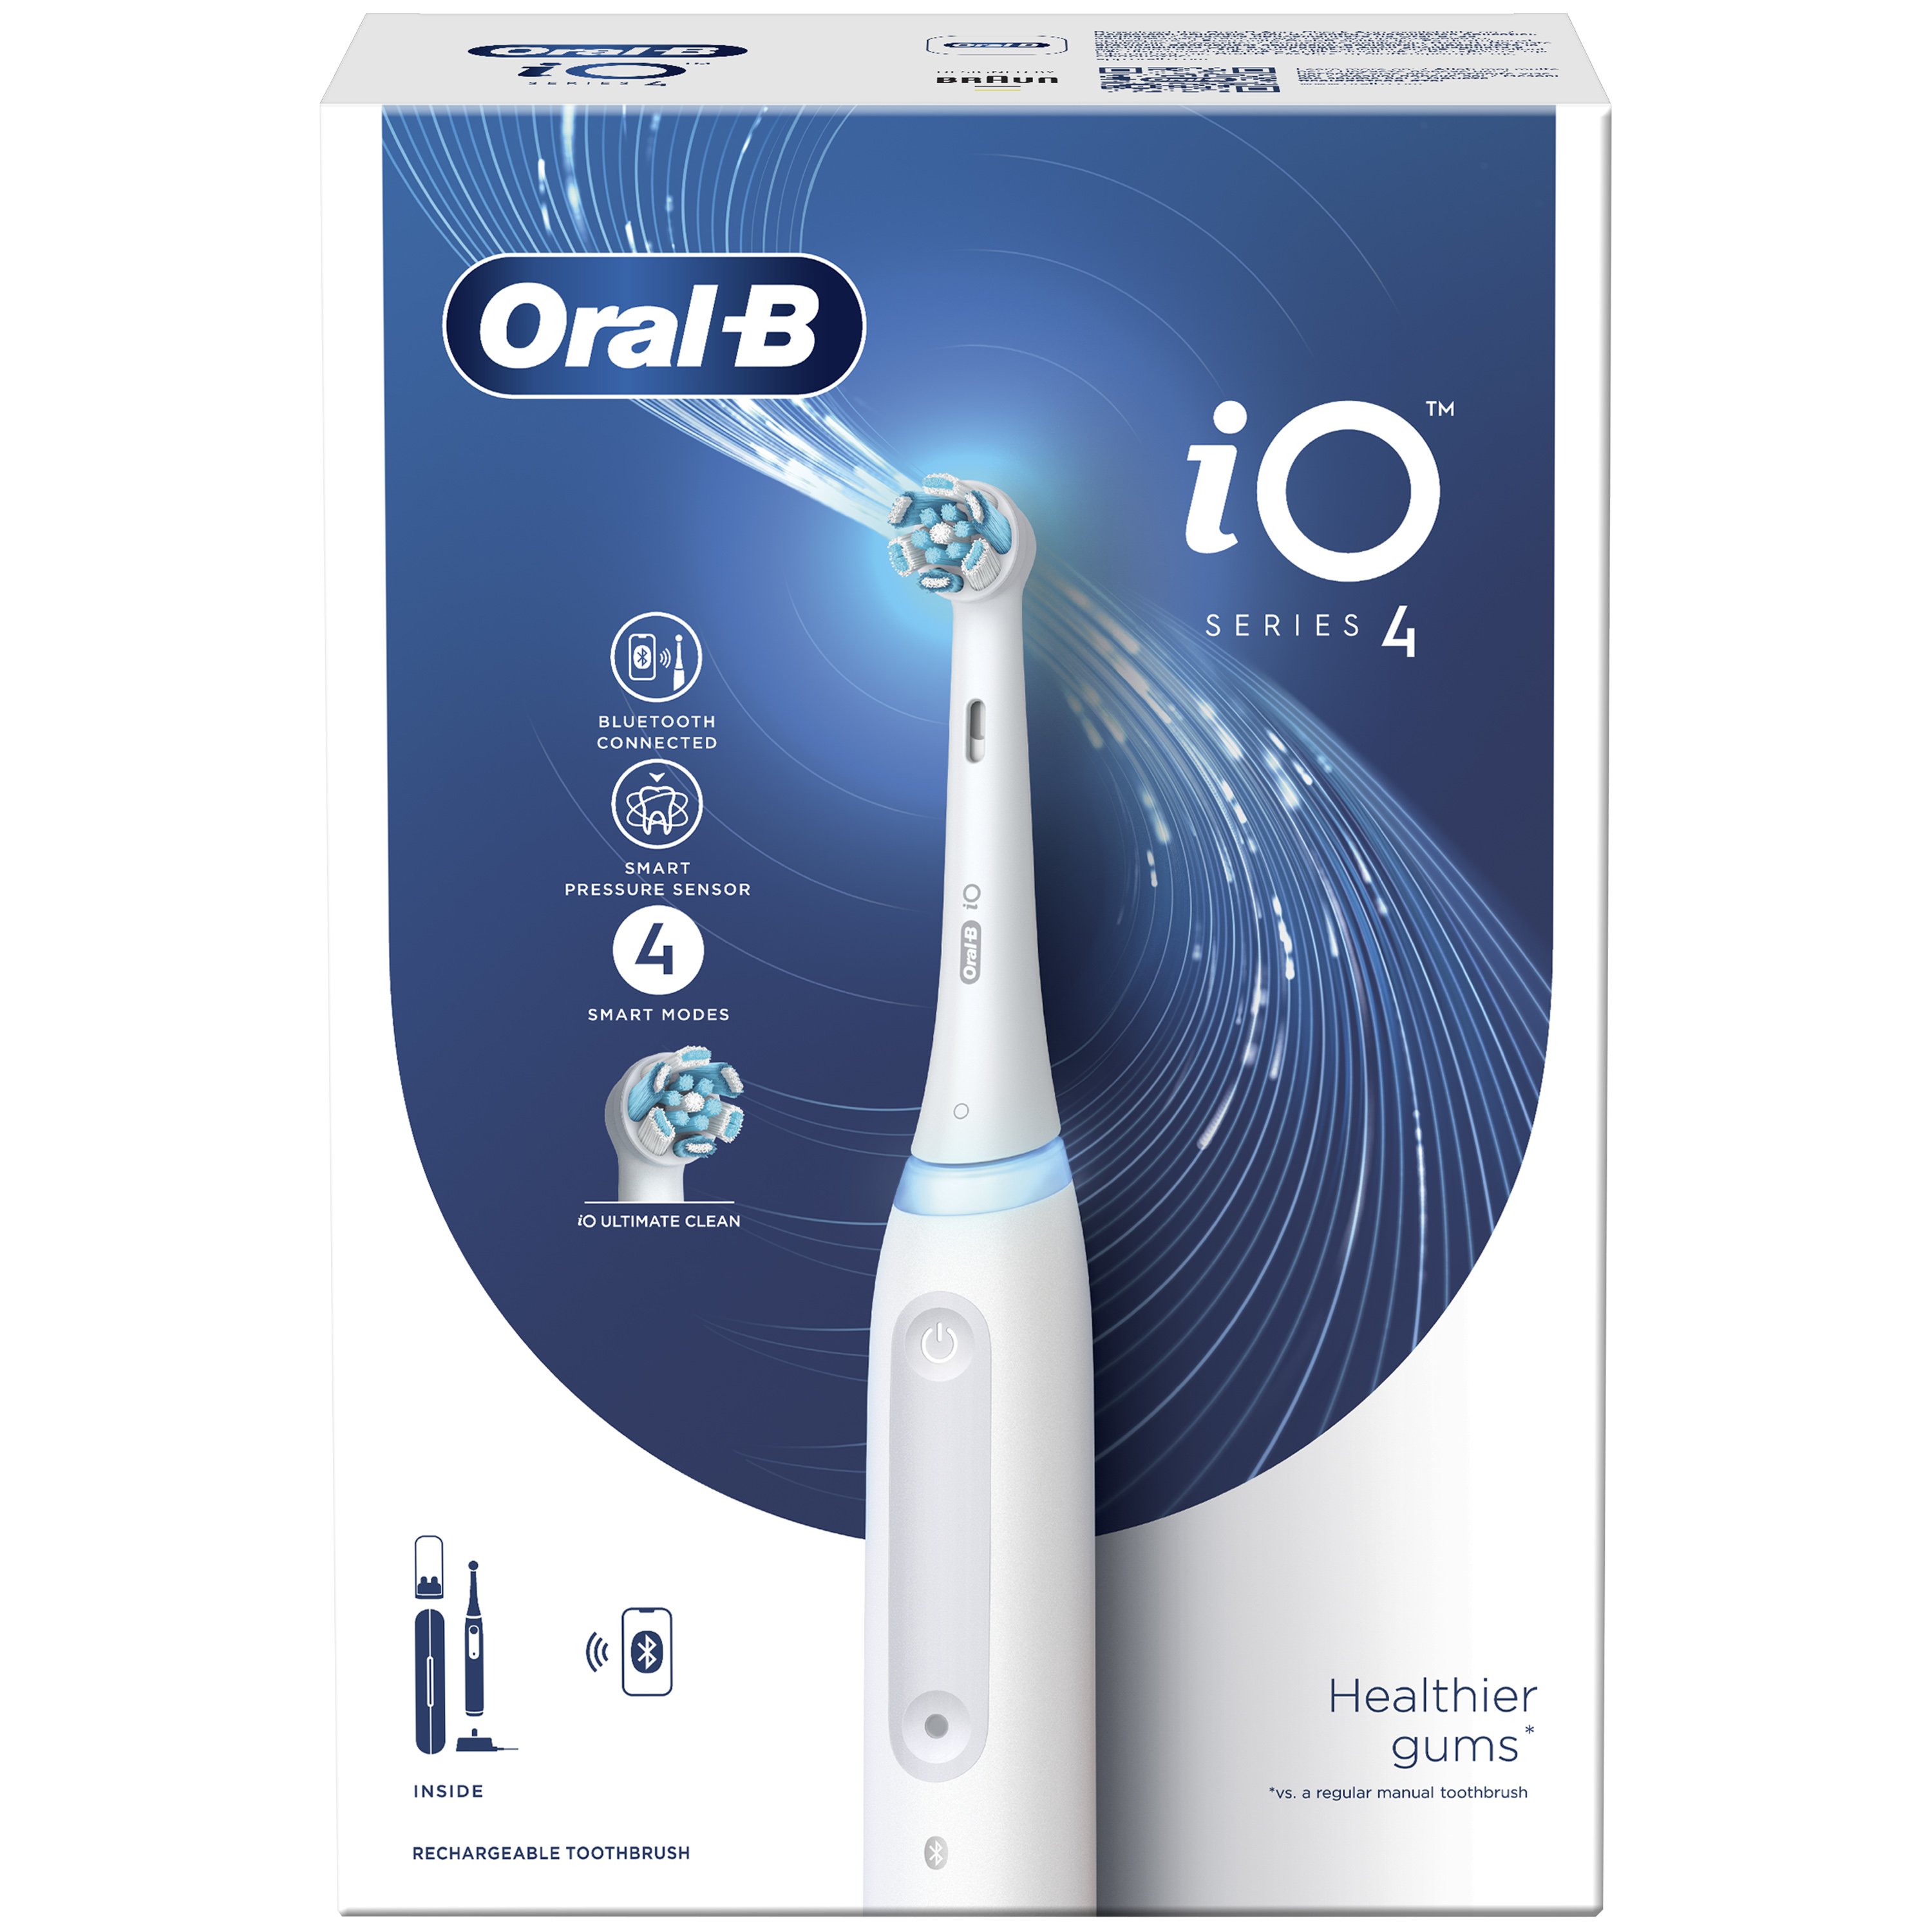 Oral-B iO Series 4 Electric Toothbrush White Ηλεκτρική Οδοντόβουρτσα Προηγμένης Τεχνολογίας σε Λευκό Χρώμα 1 Τεμάχιο